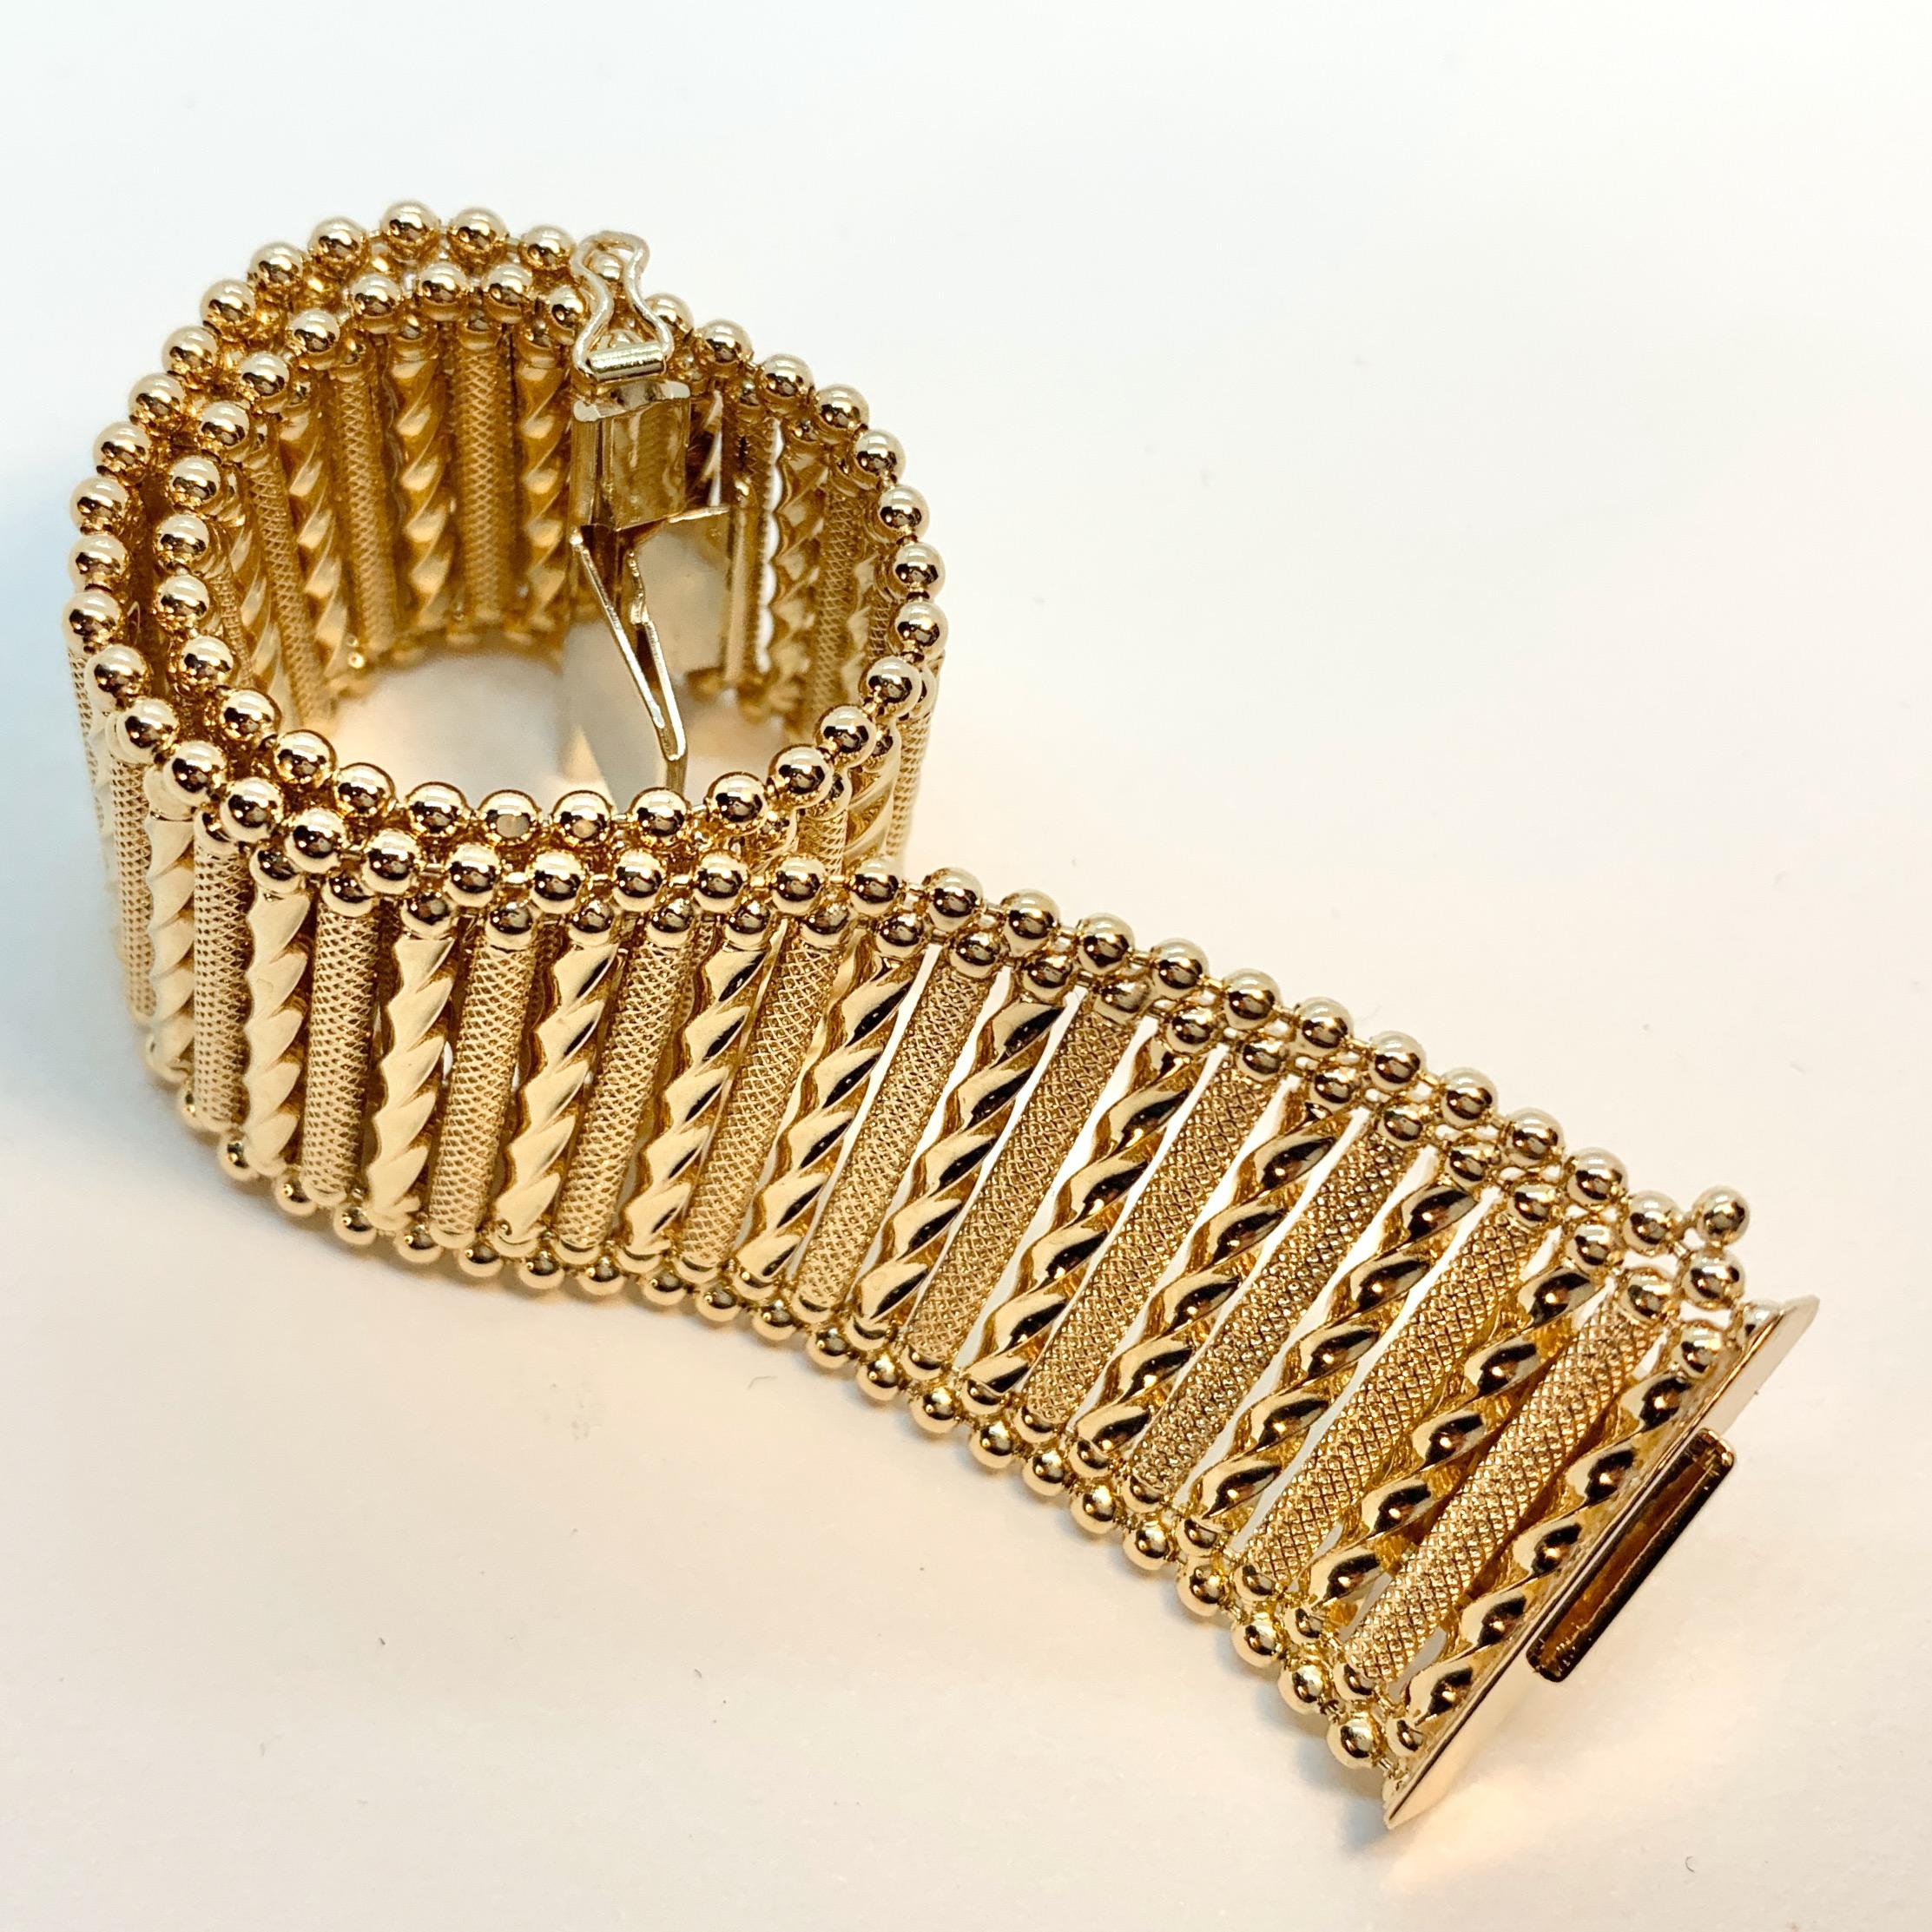 Contemporary Rope Ladder Cuff Bracelet in 18 Karat Yellow Gold by UnoAErre